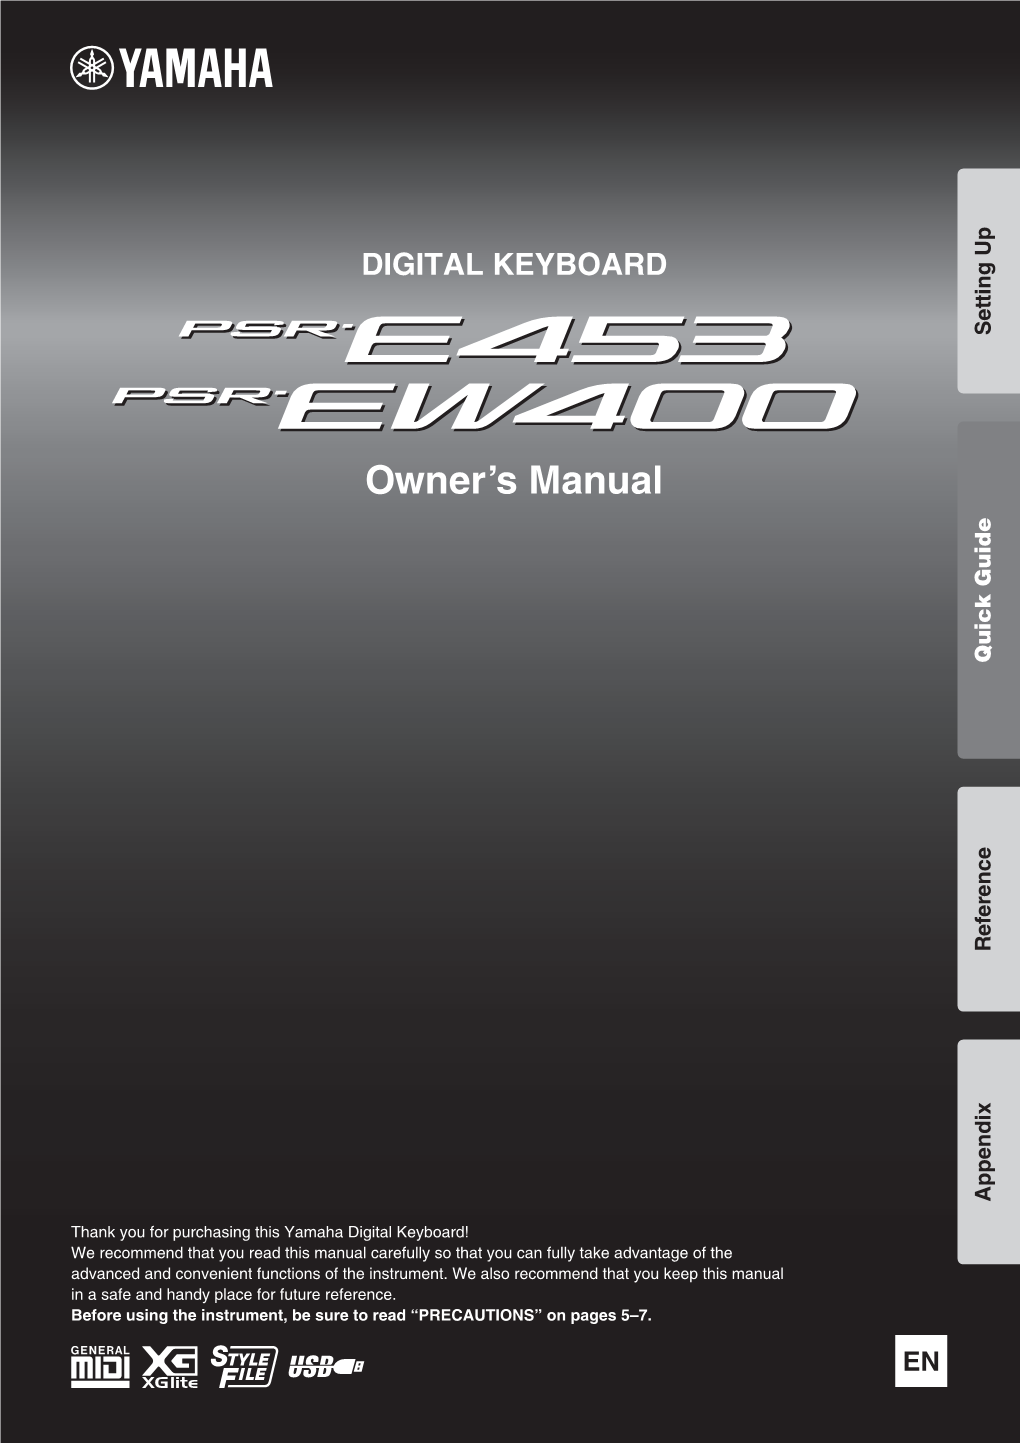 PSR-E453/PSR-EW400 Owner's Manual